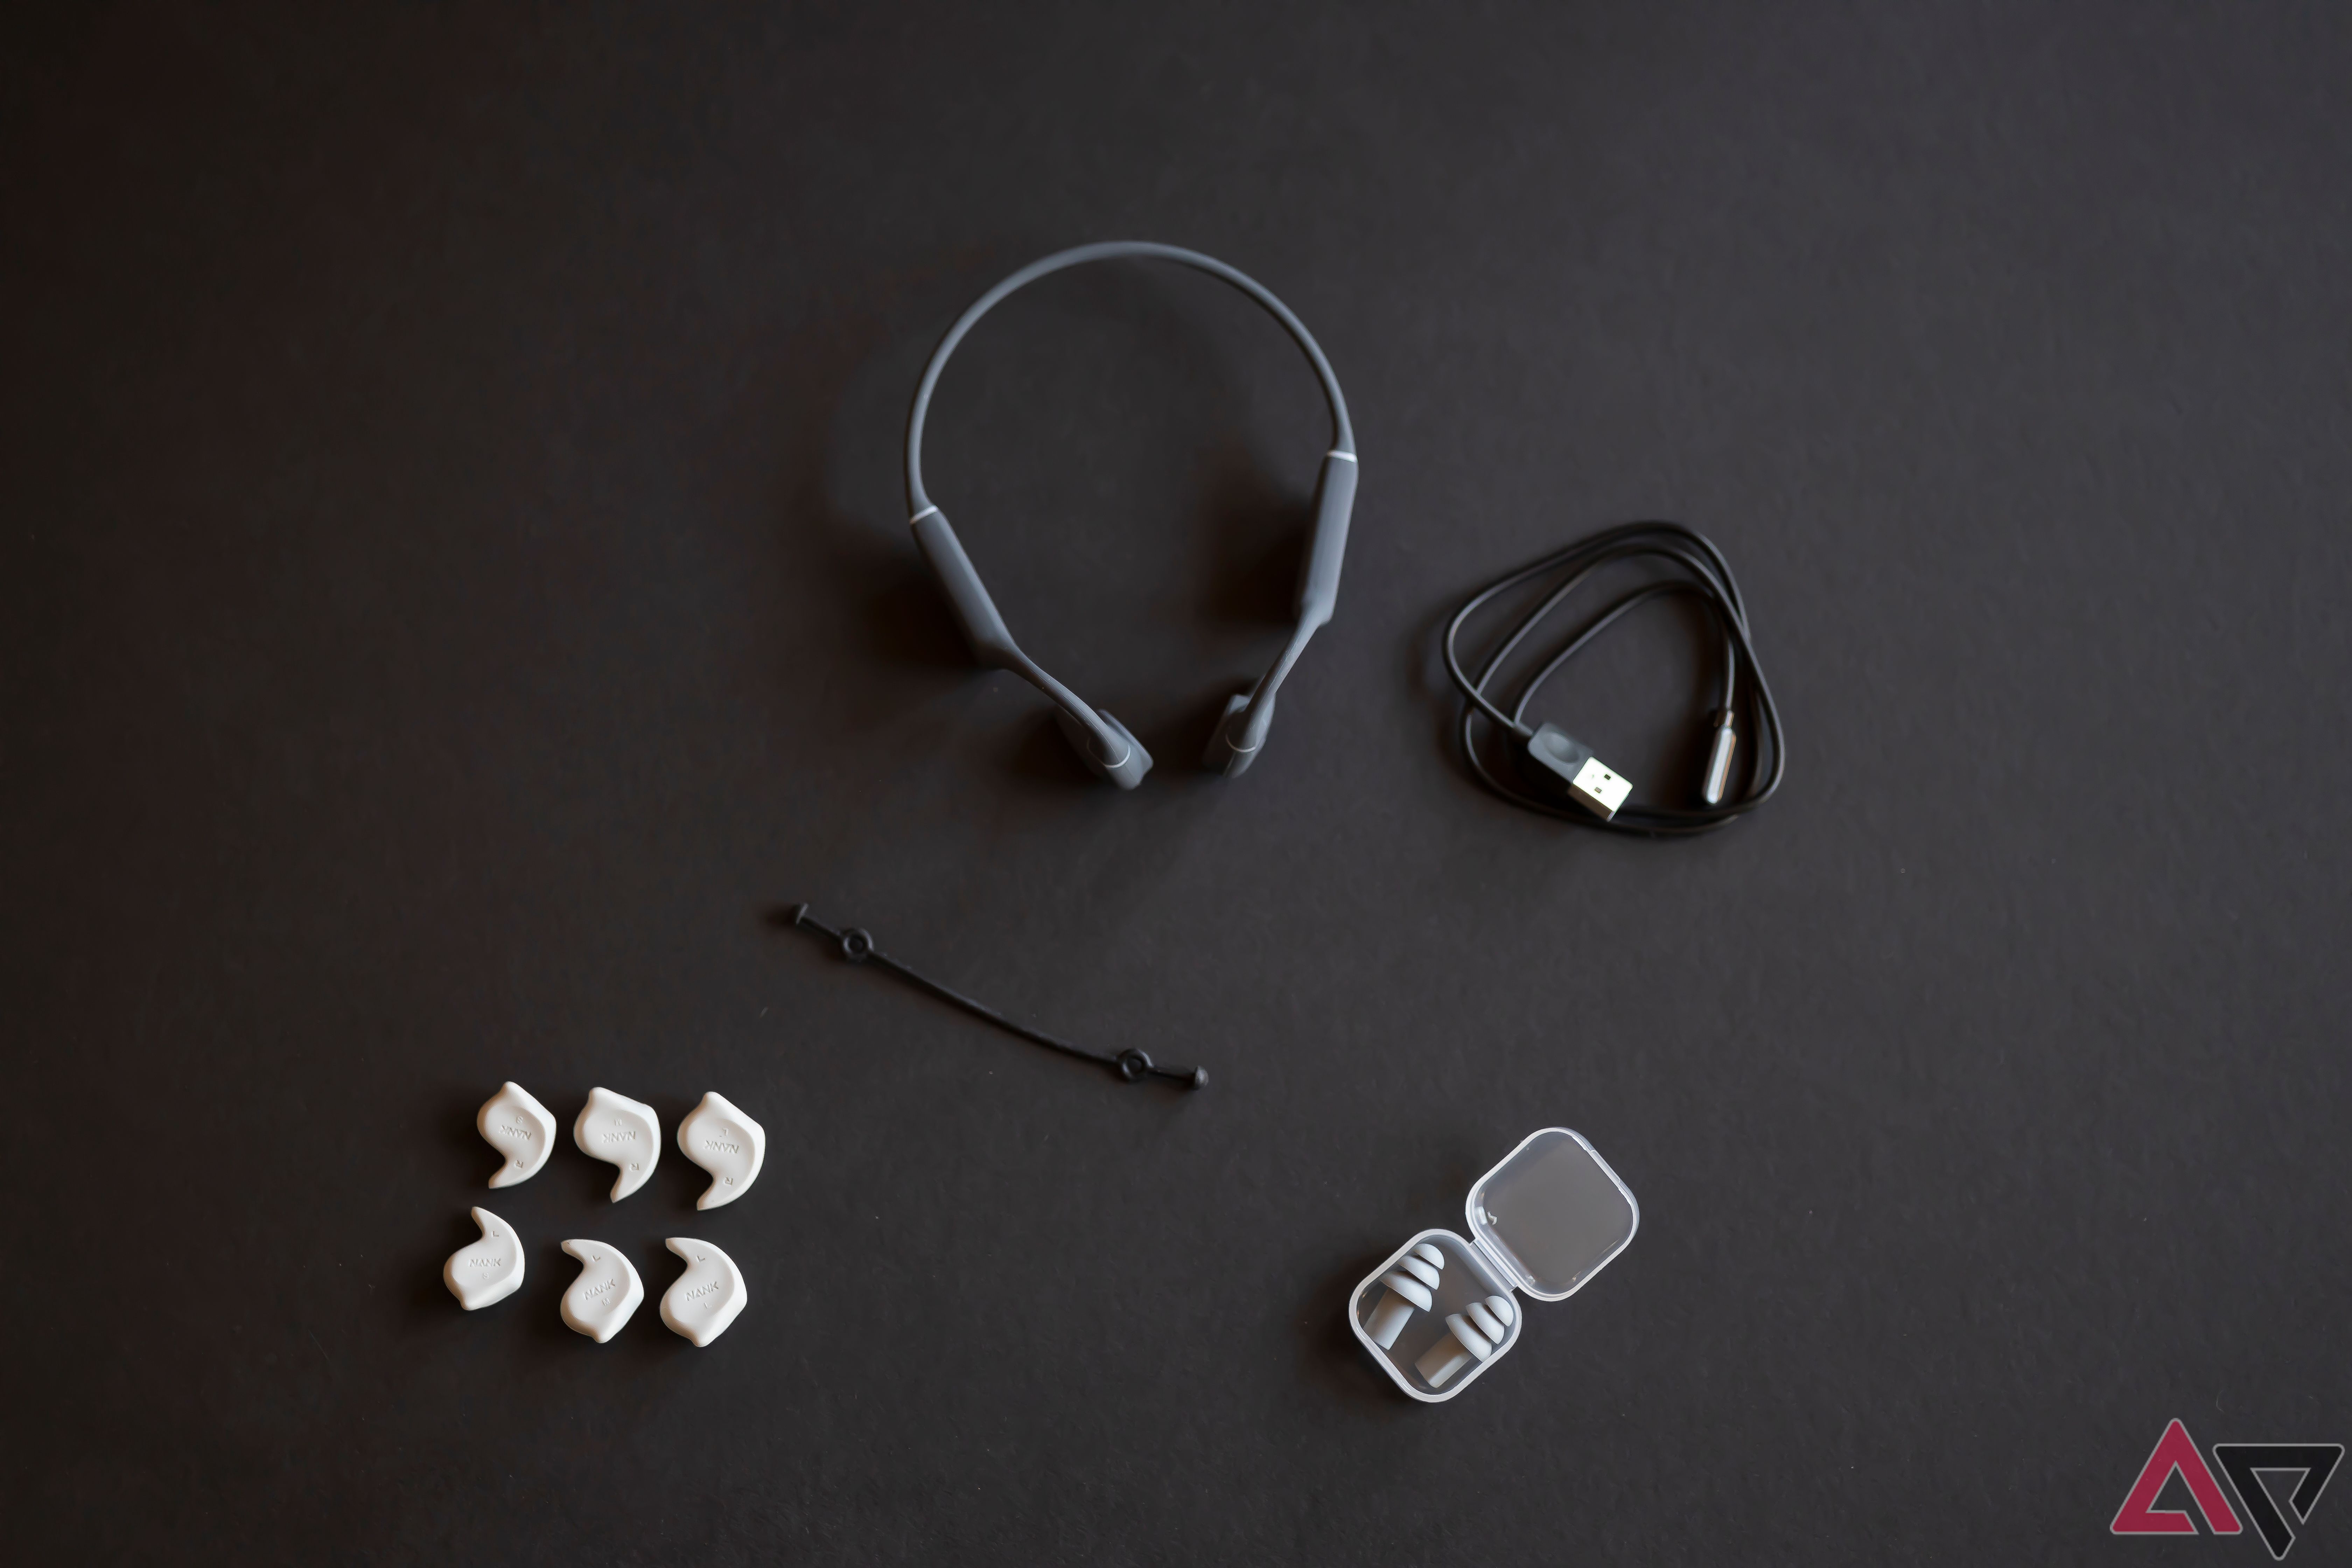 Naenka Runner Diver 2 headphones and accessories on black background